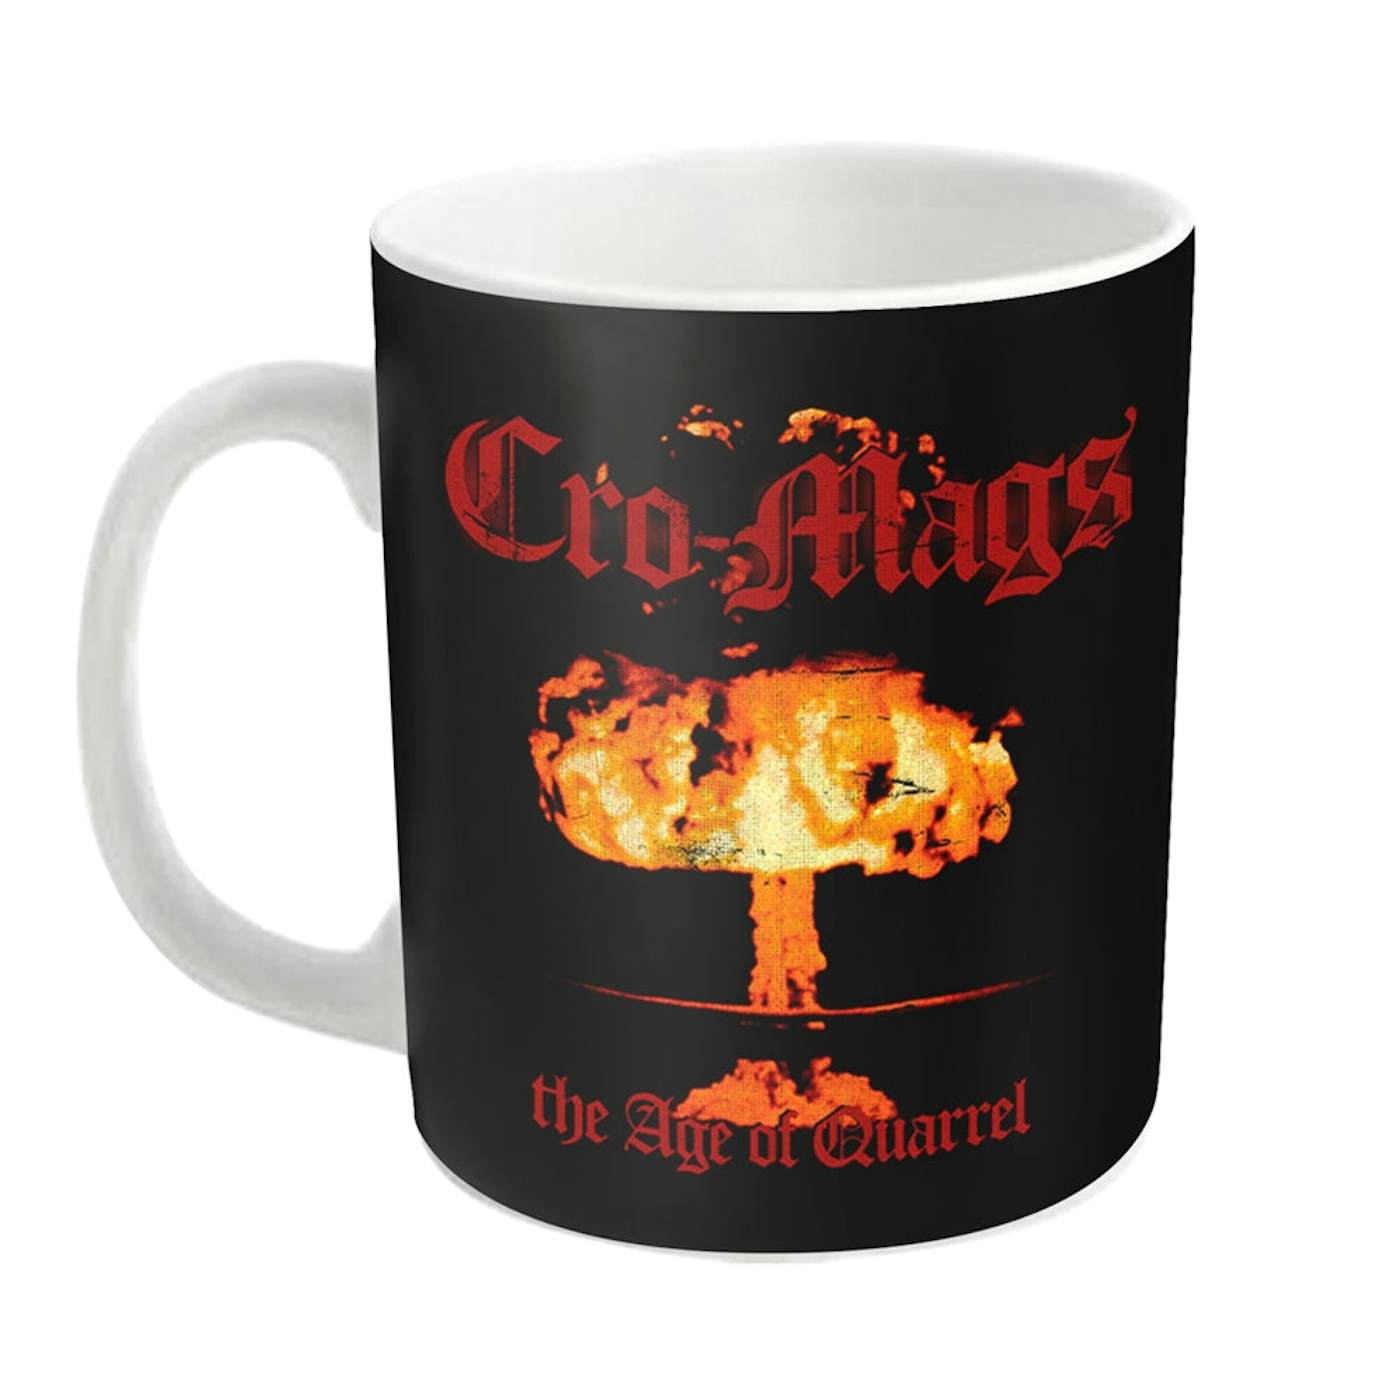 Cro-Mags Mug - The Age Of Quarrel